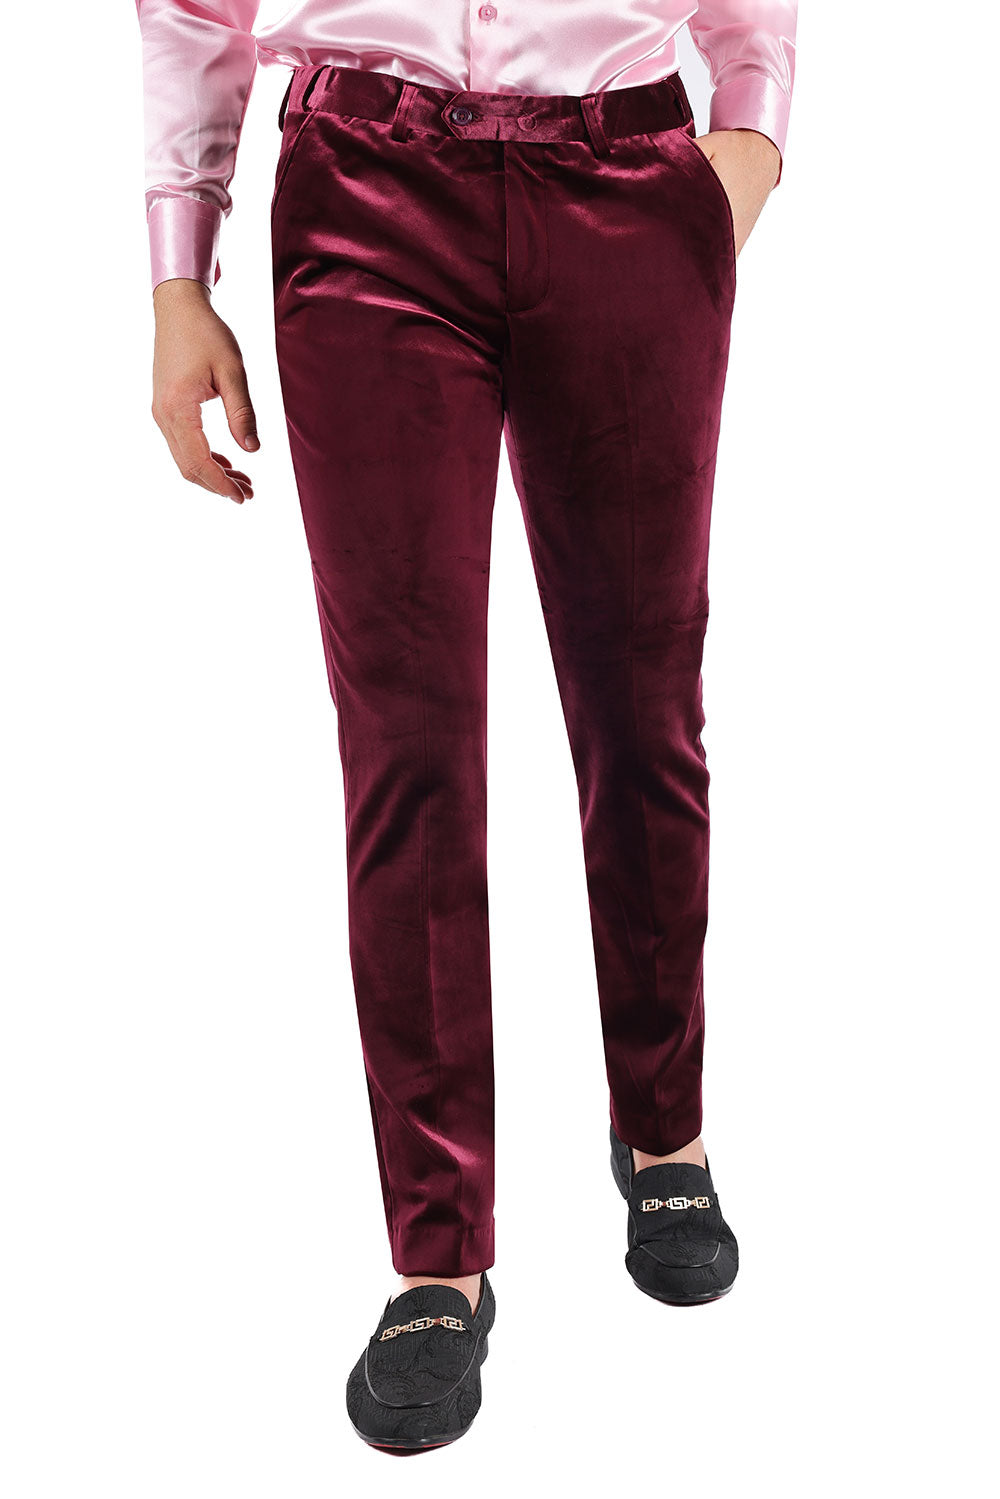 Barabas Men's Velvet Shiny Chino Solid Color Dress Pants 3CP04 Burgundy